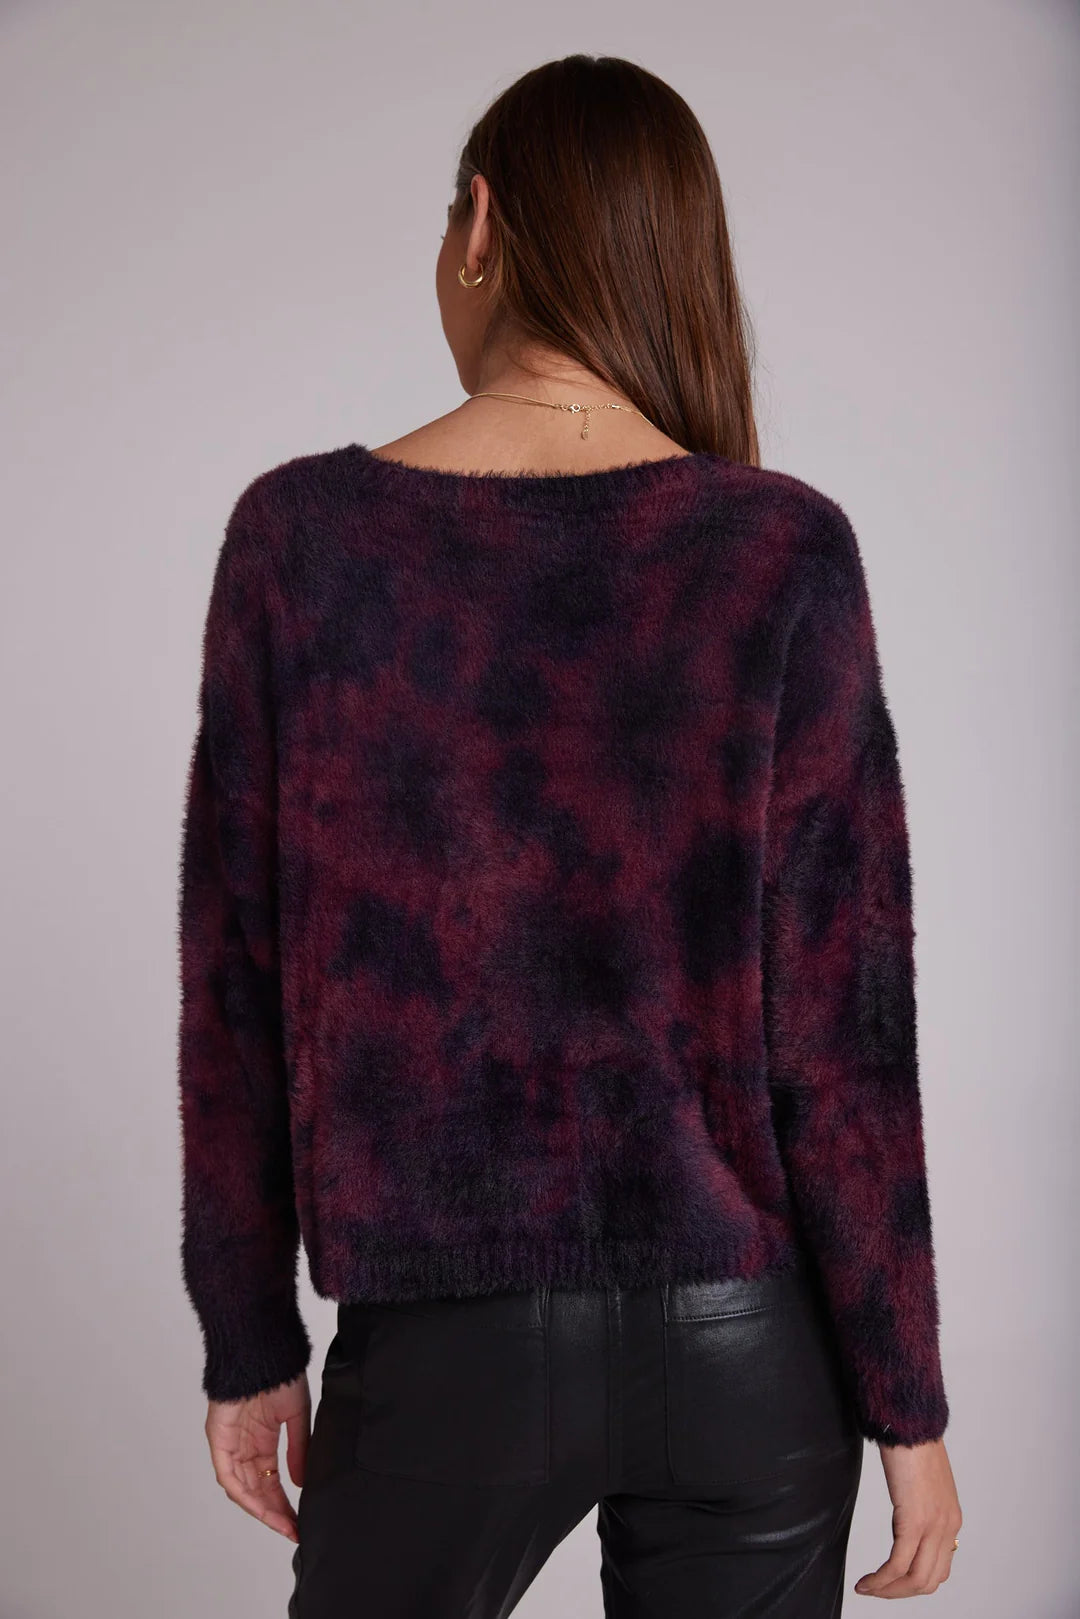 Slouchy sweater - sangria cloud dye